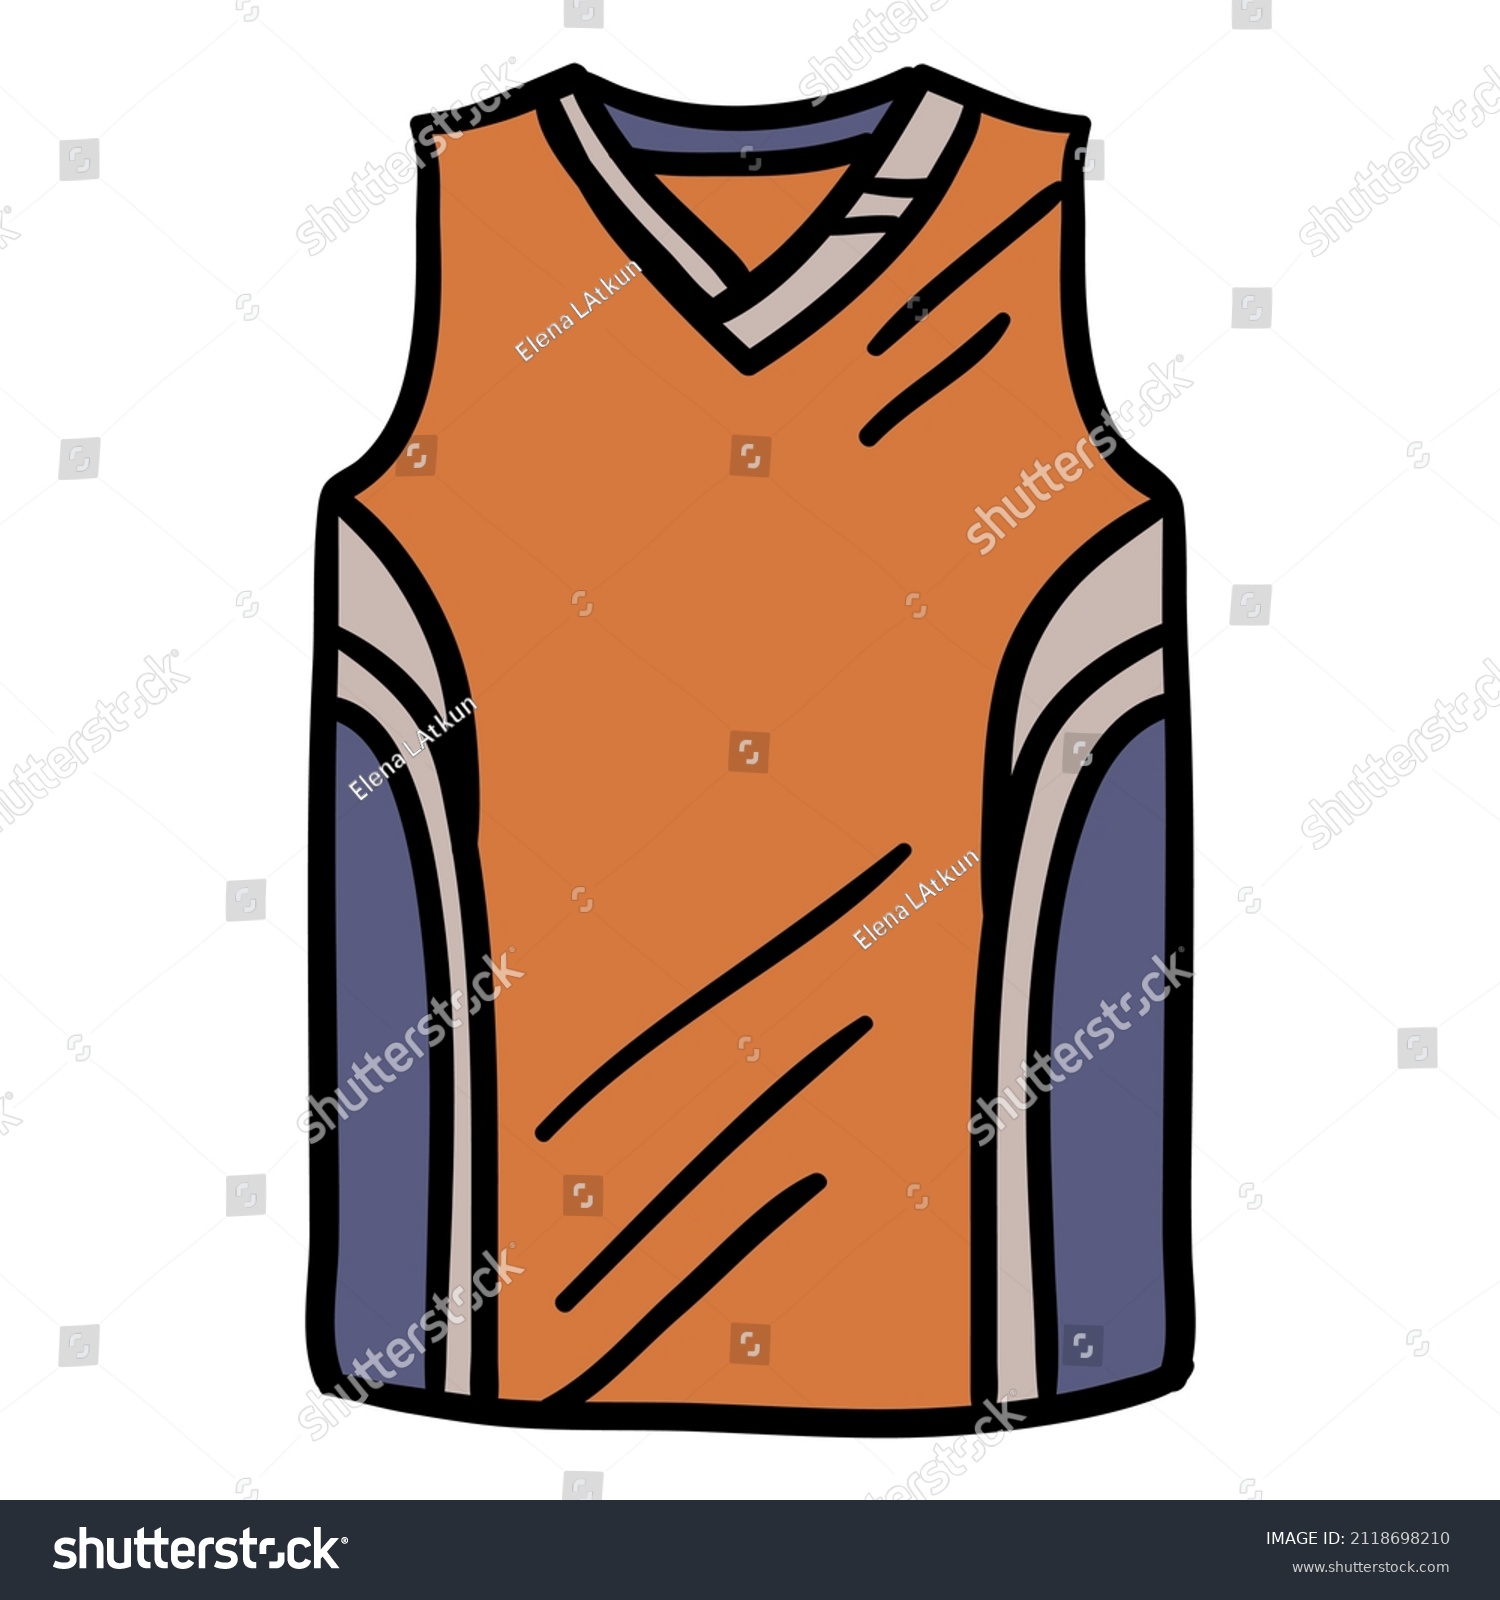 SVG of Shirt Basketball Hand Drawn. High quality illustration svg